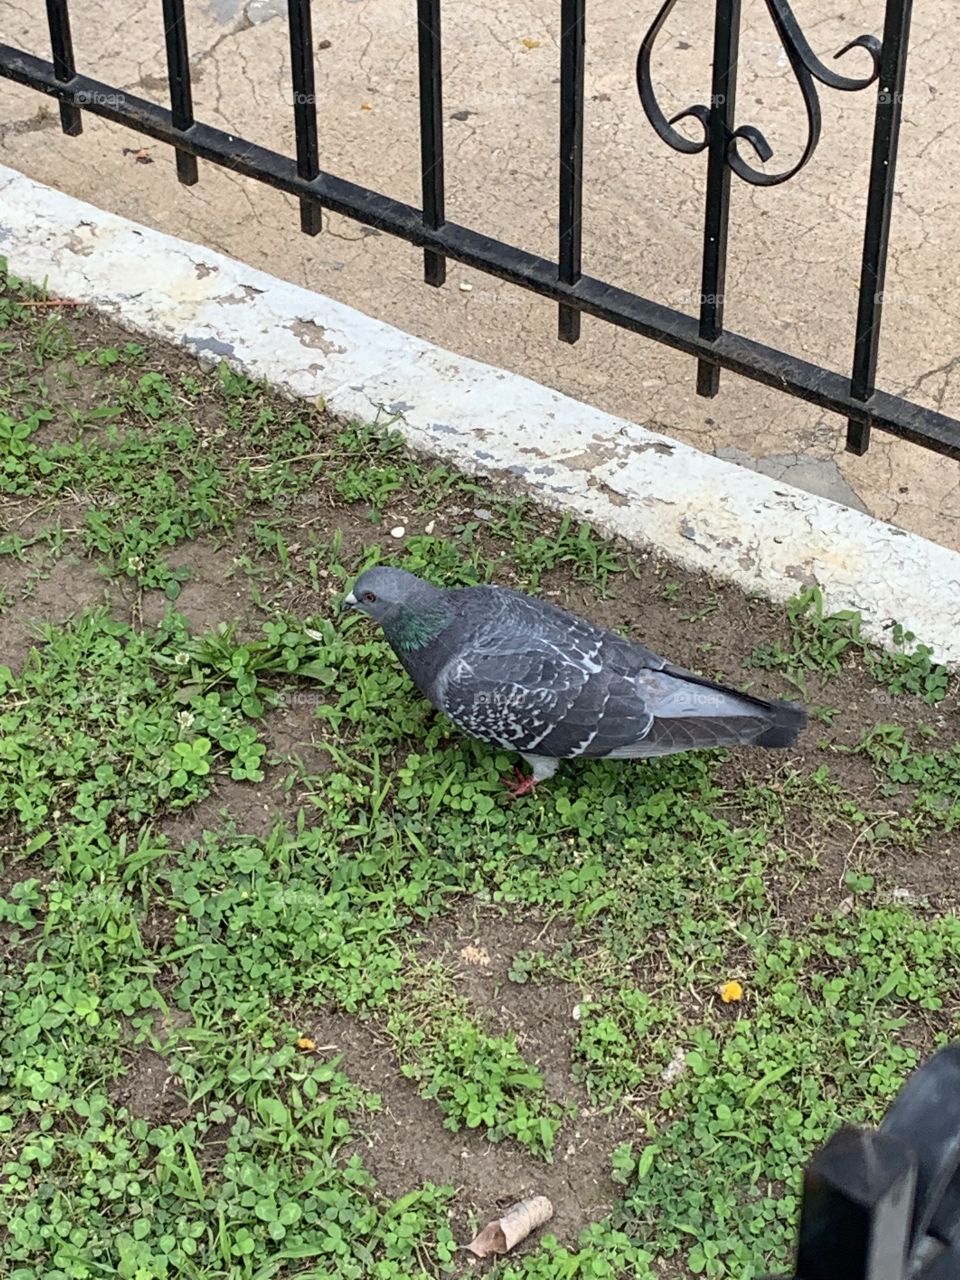 Pigeon (New York City wildlife)